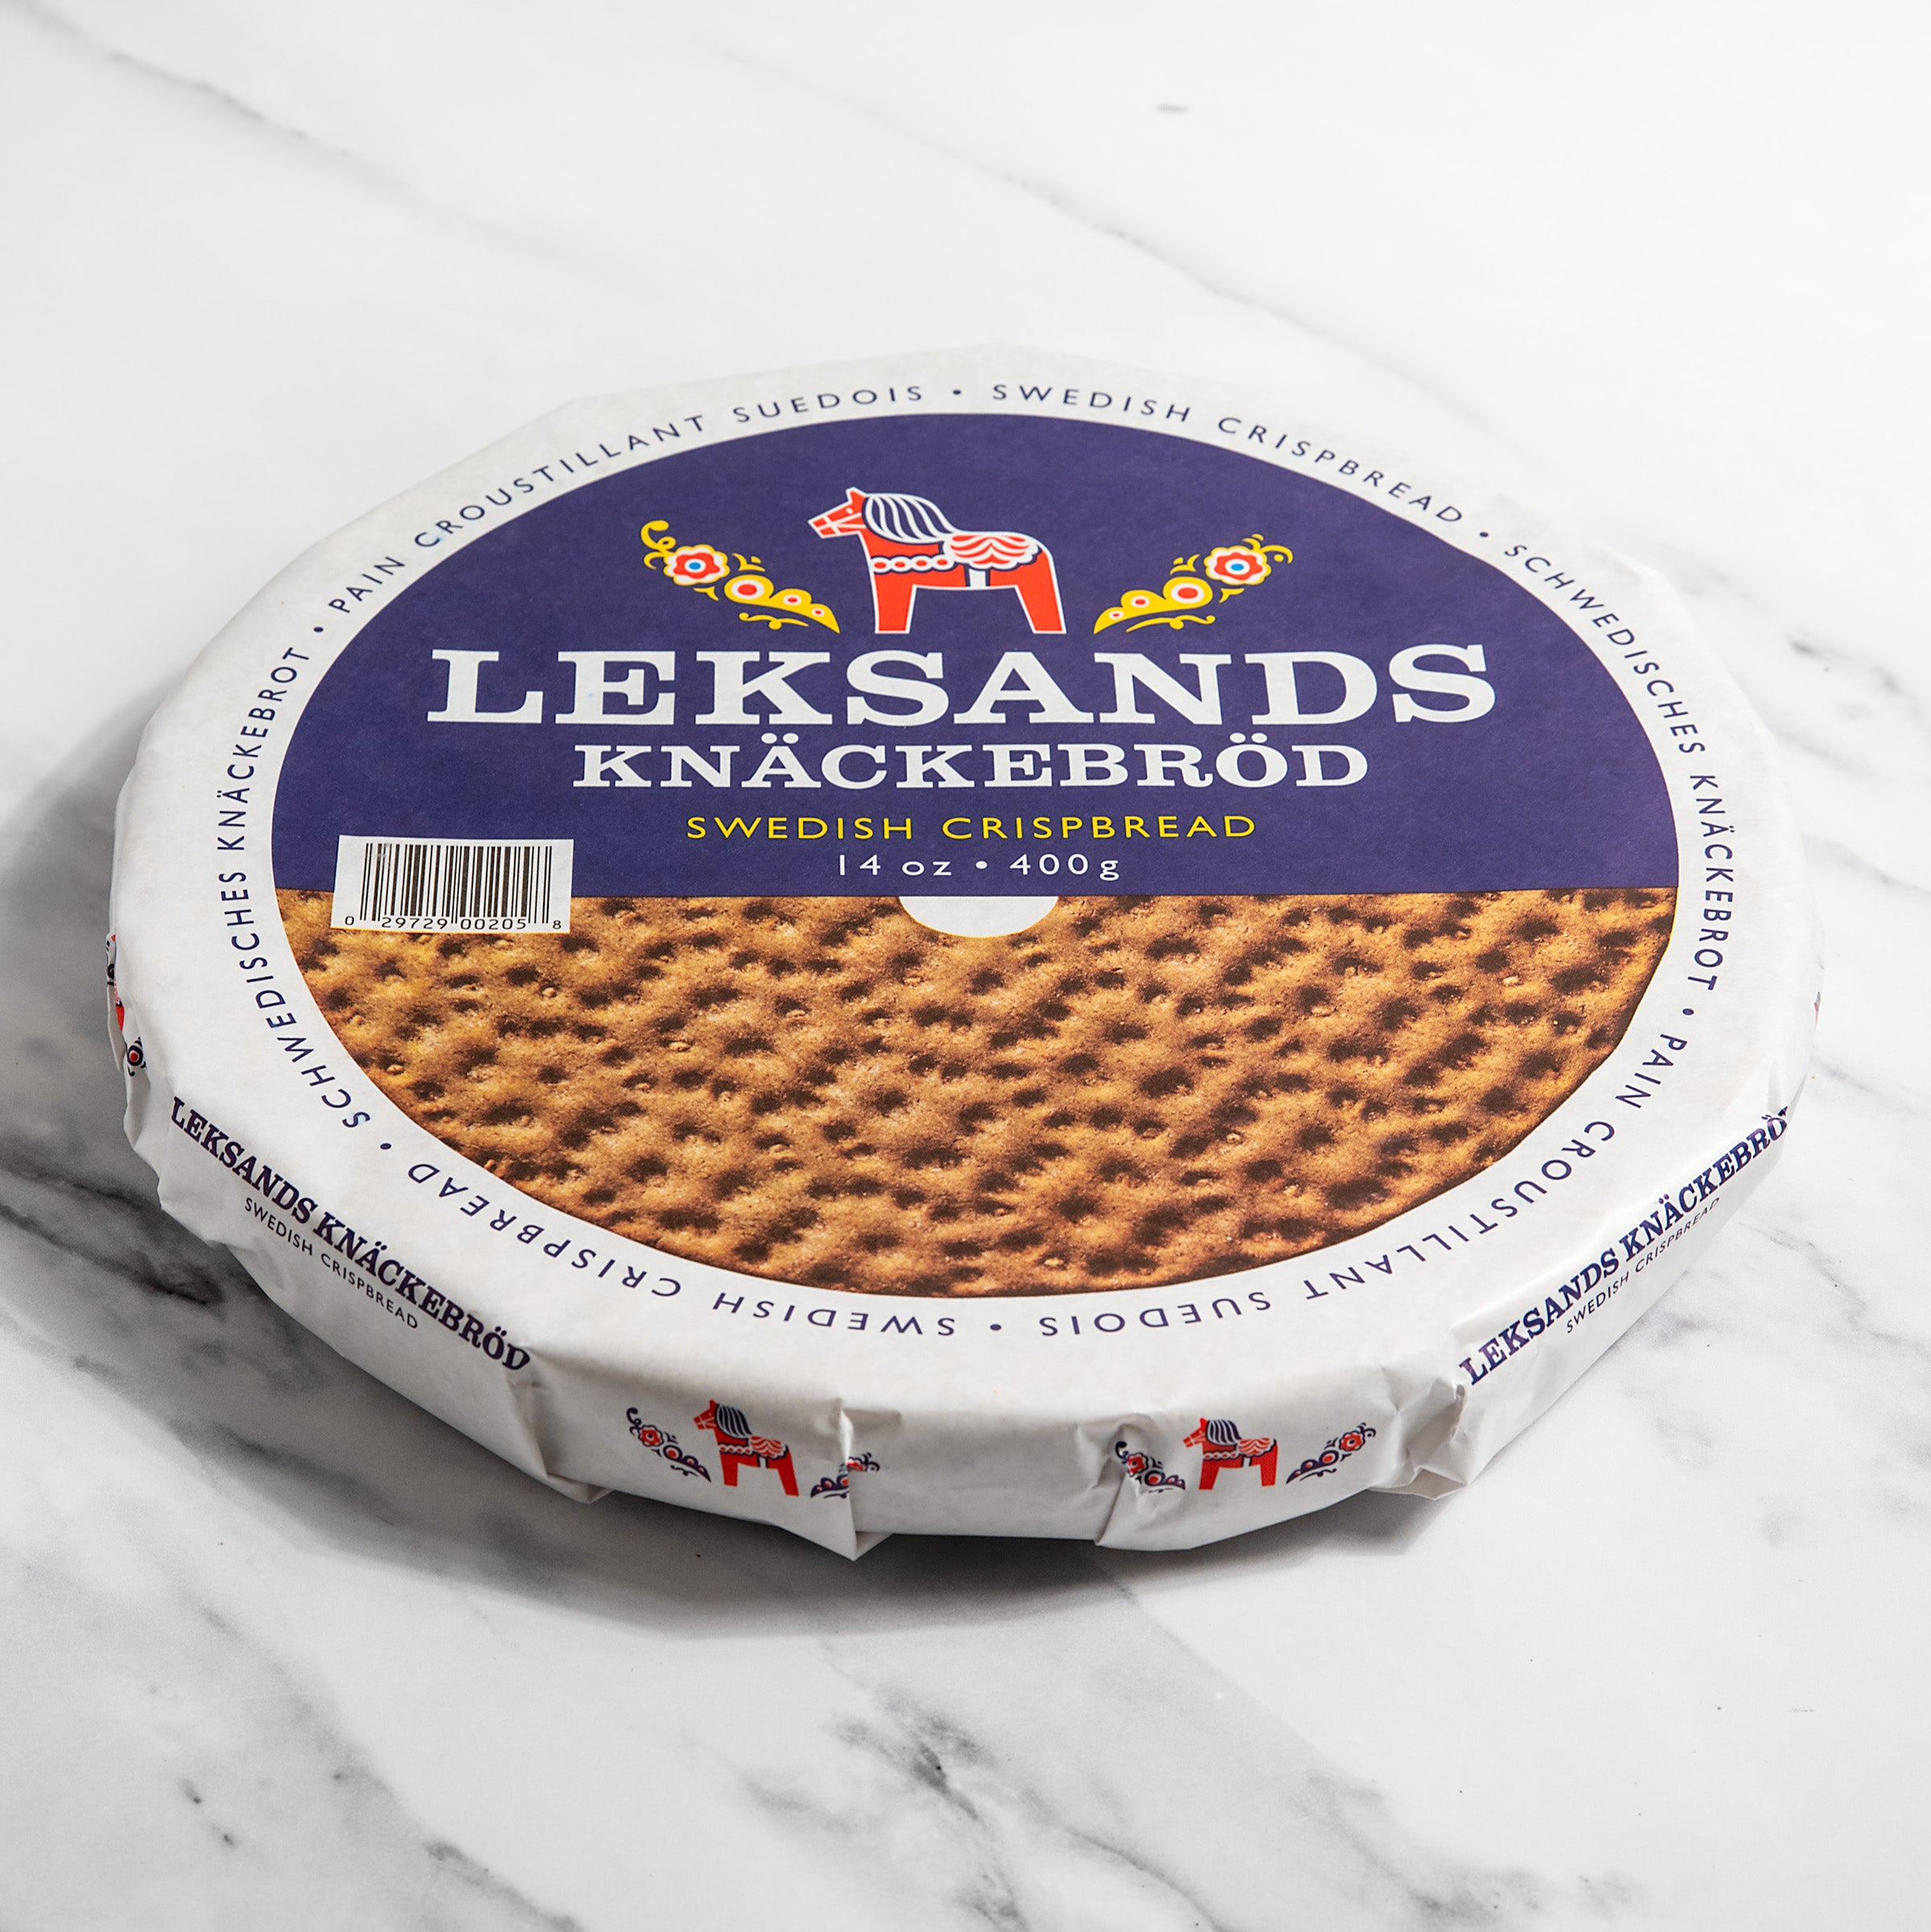 igourmet_2779_Swedish Rye Crispbreads Rounds_Leksands_Chips, Crisps & Crackers